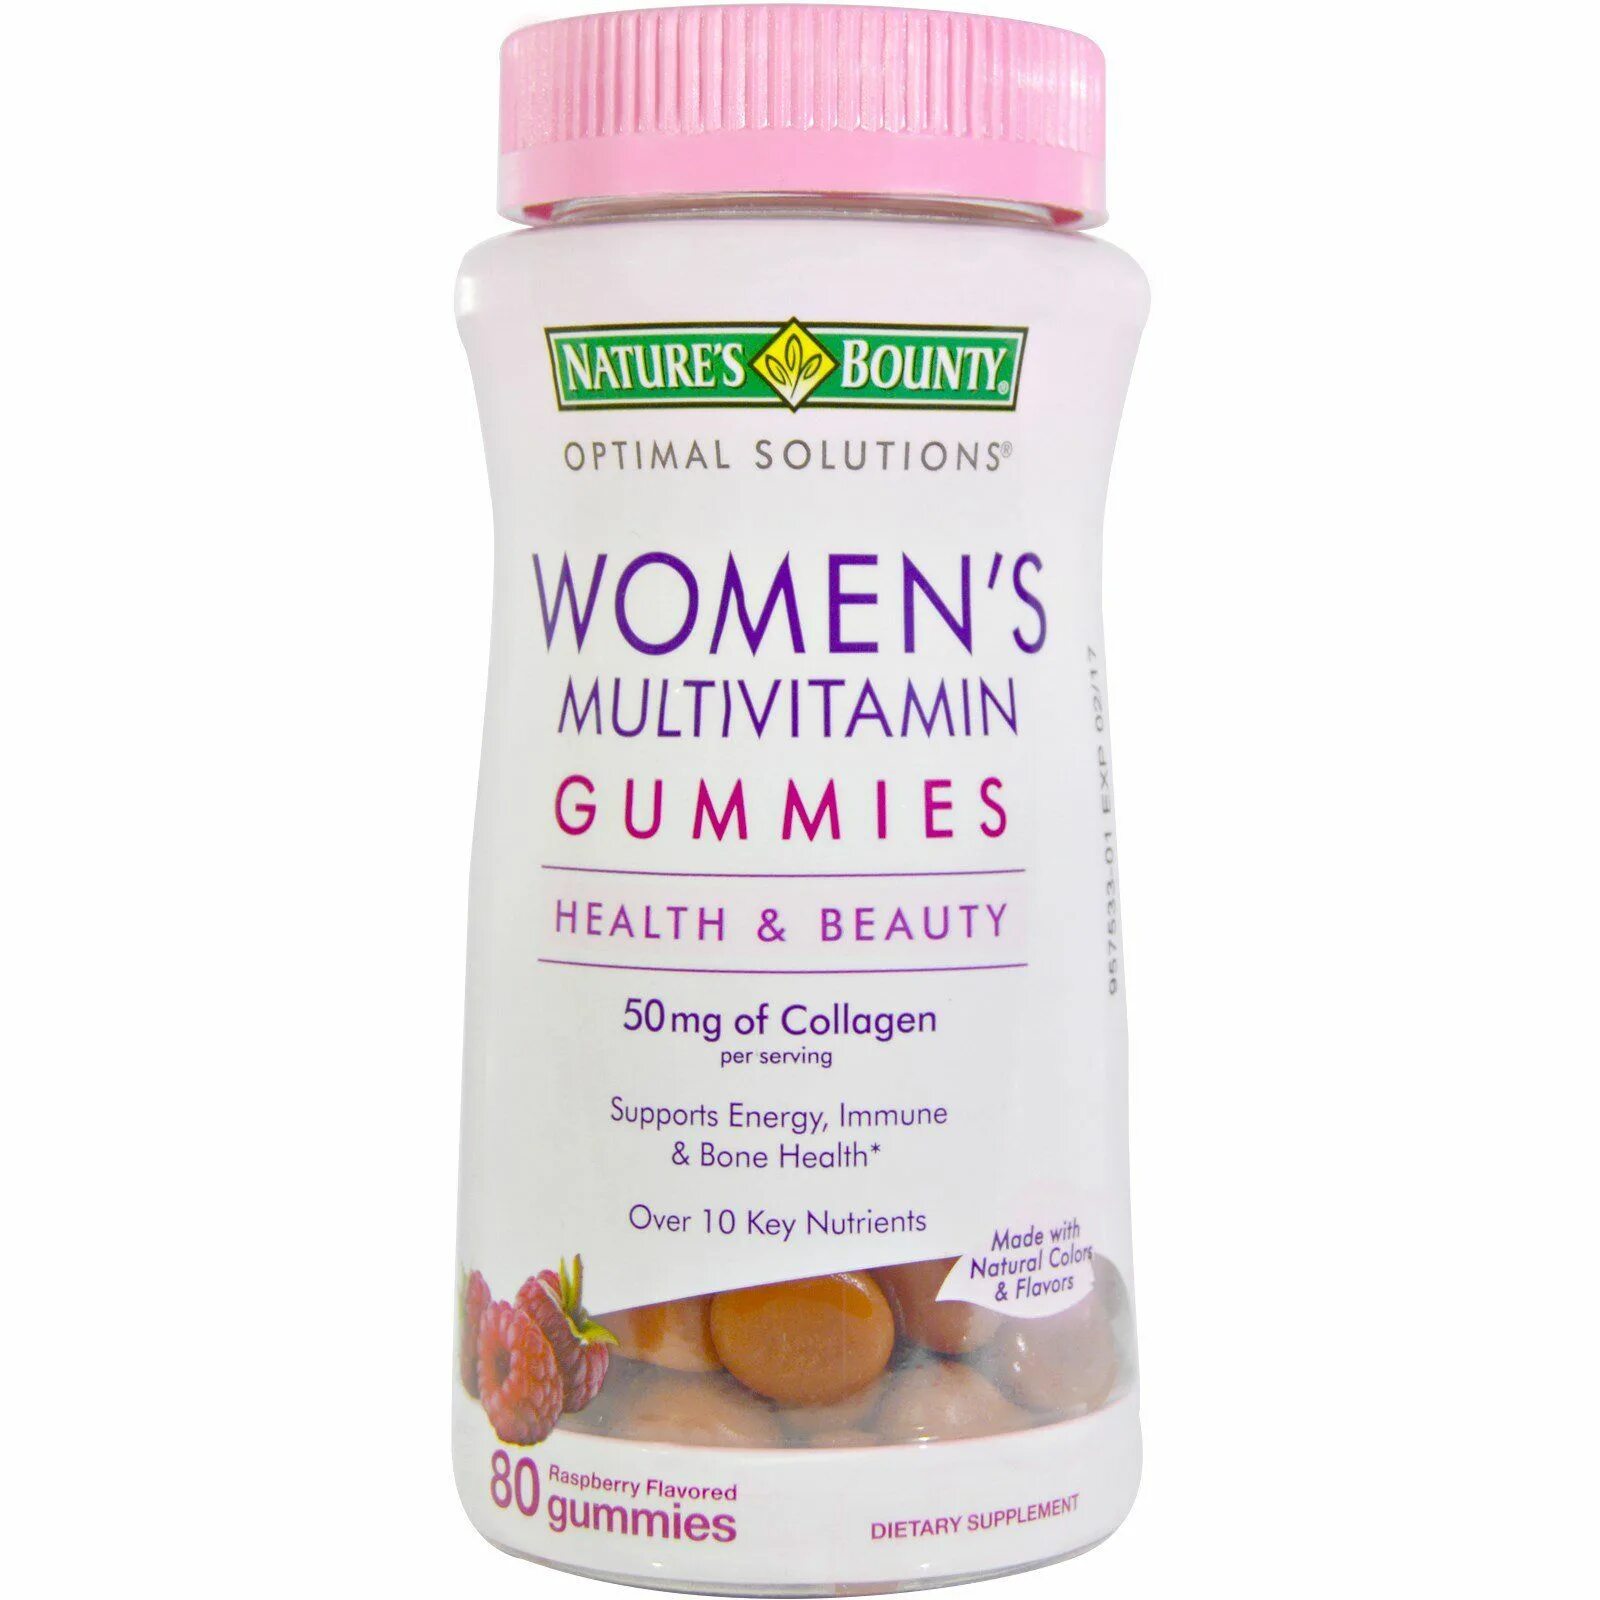 Nature Bounty nature витамины. Жевательные витамины natures Bounty. Nature's Bounty Multivitamin Gummies. Natures Bounty для женщин.